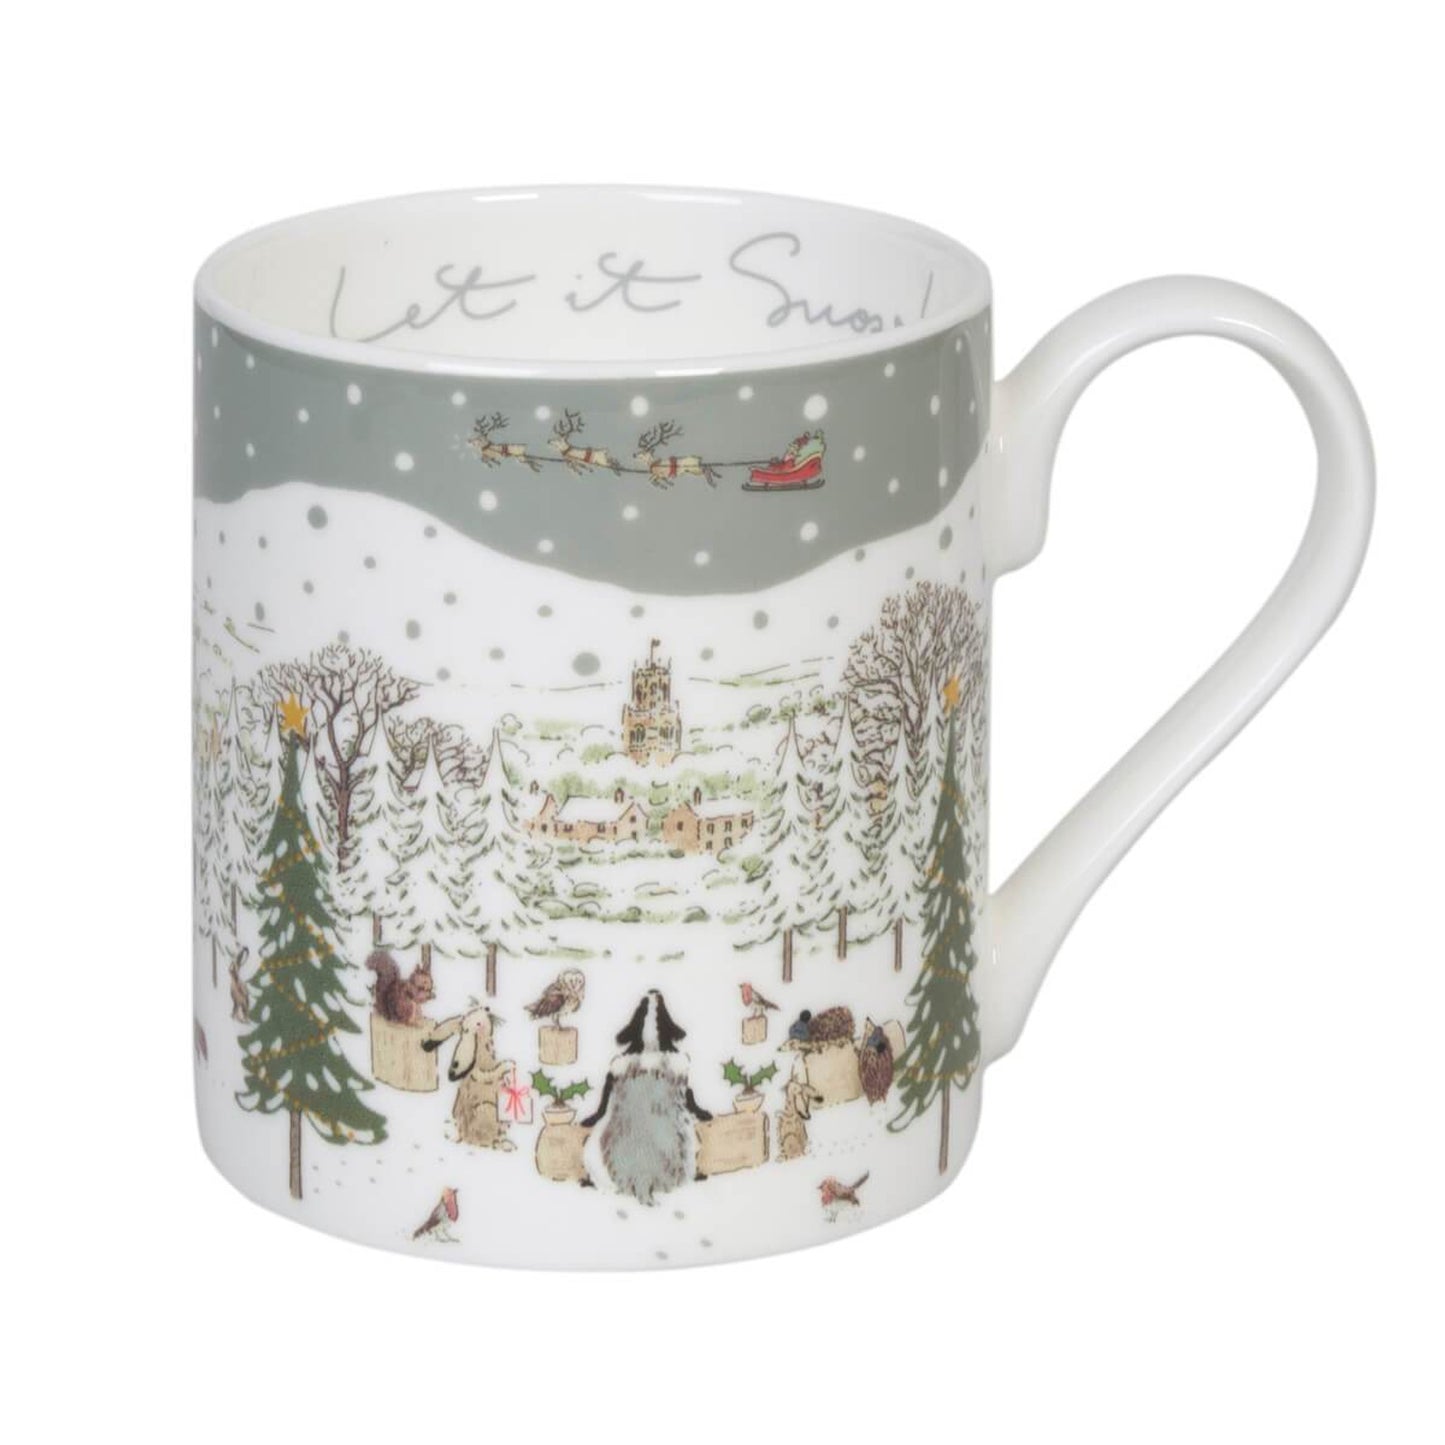 Festive Forest "Let It Snow" Mug